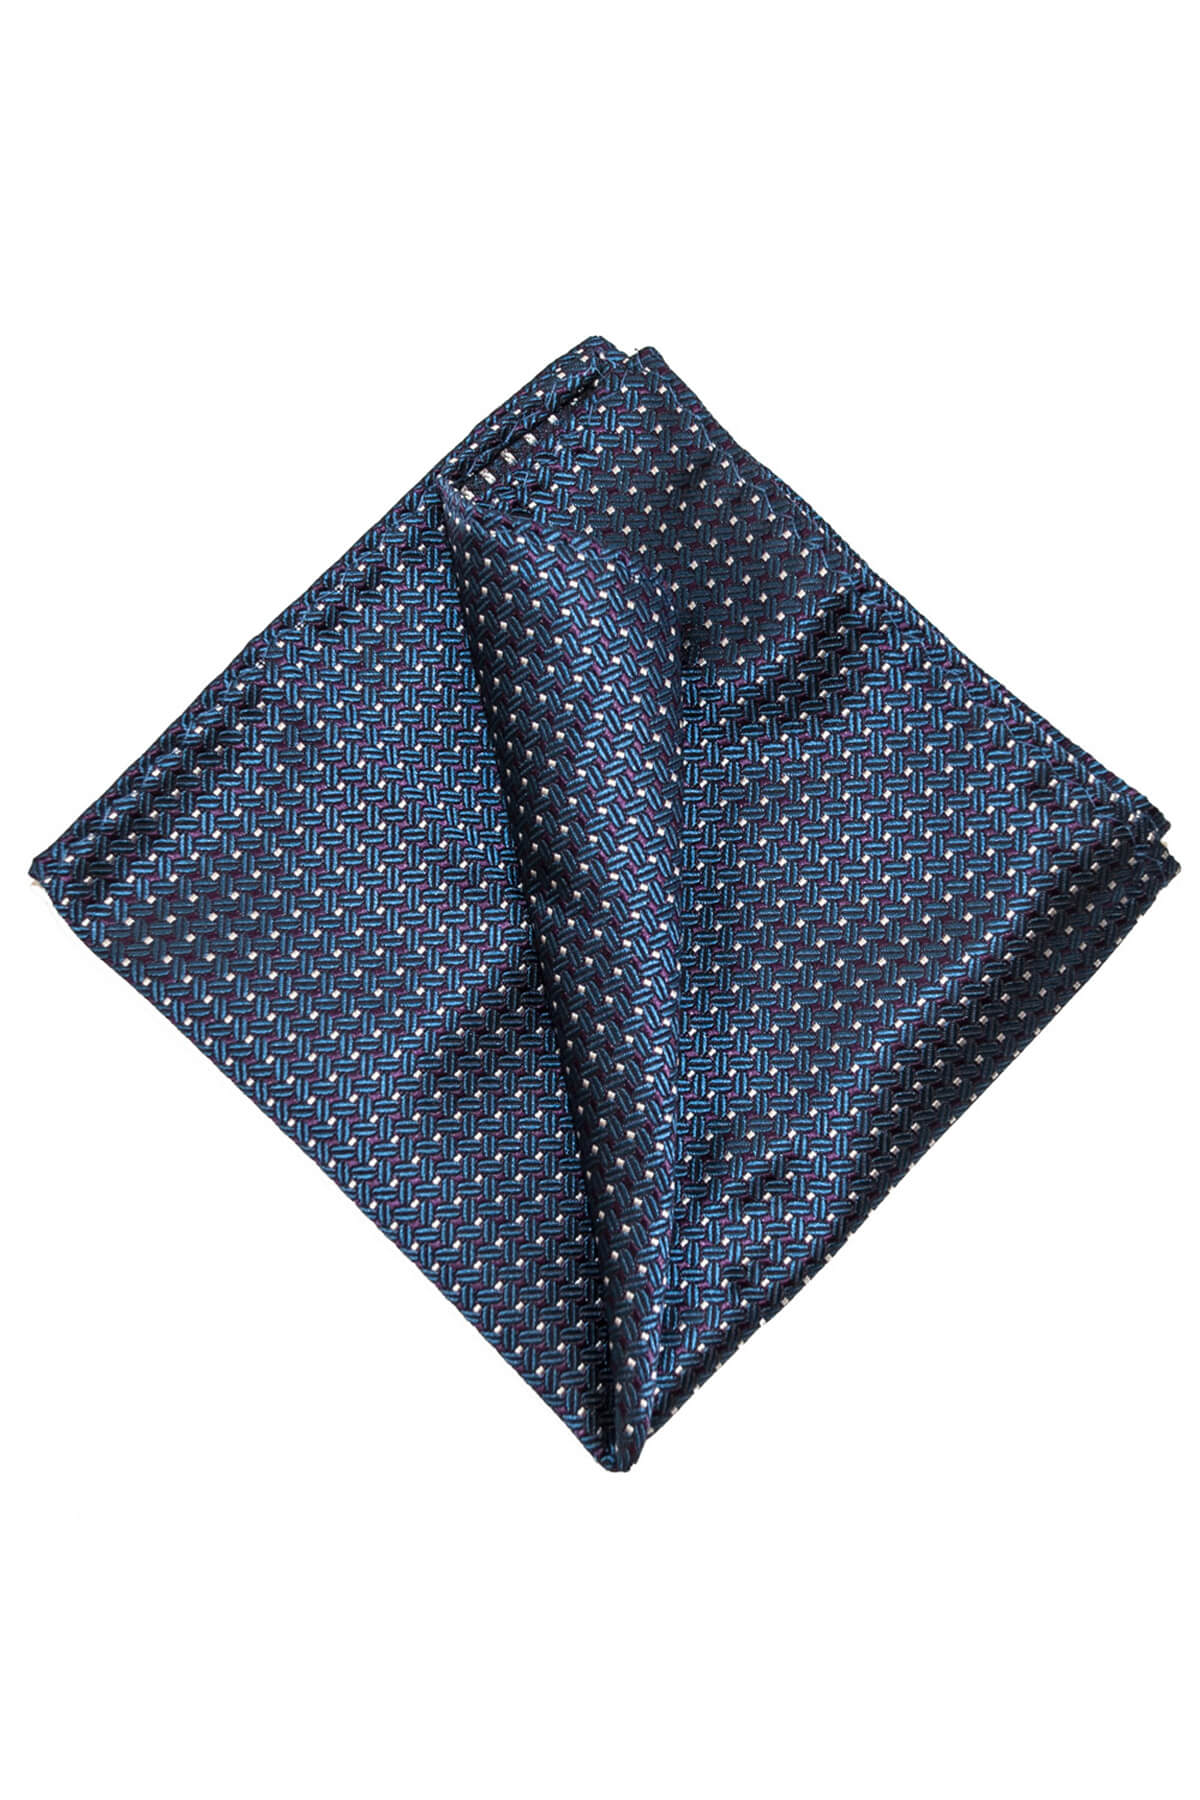 Leonardo Uomo Printed Tie